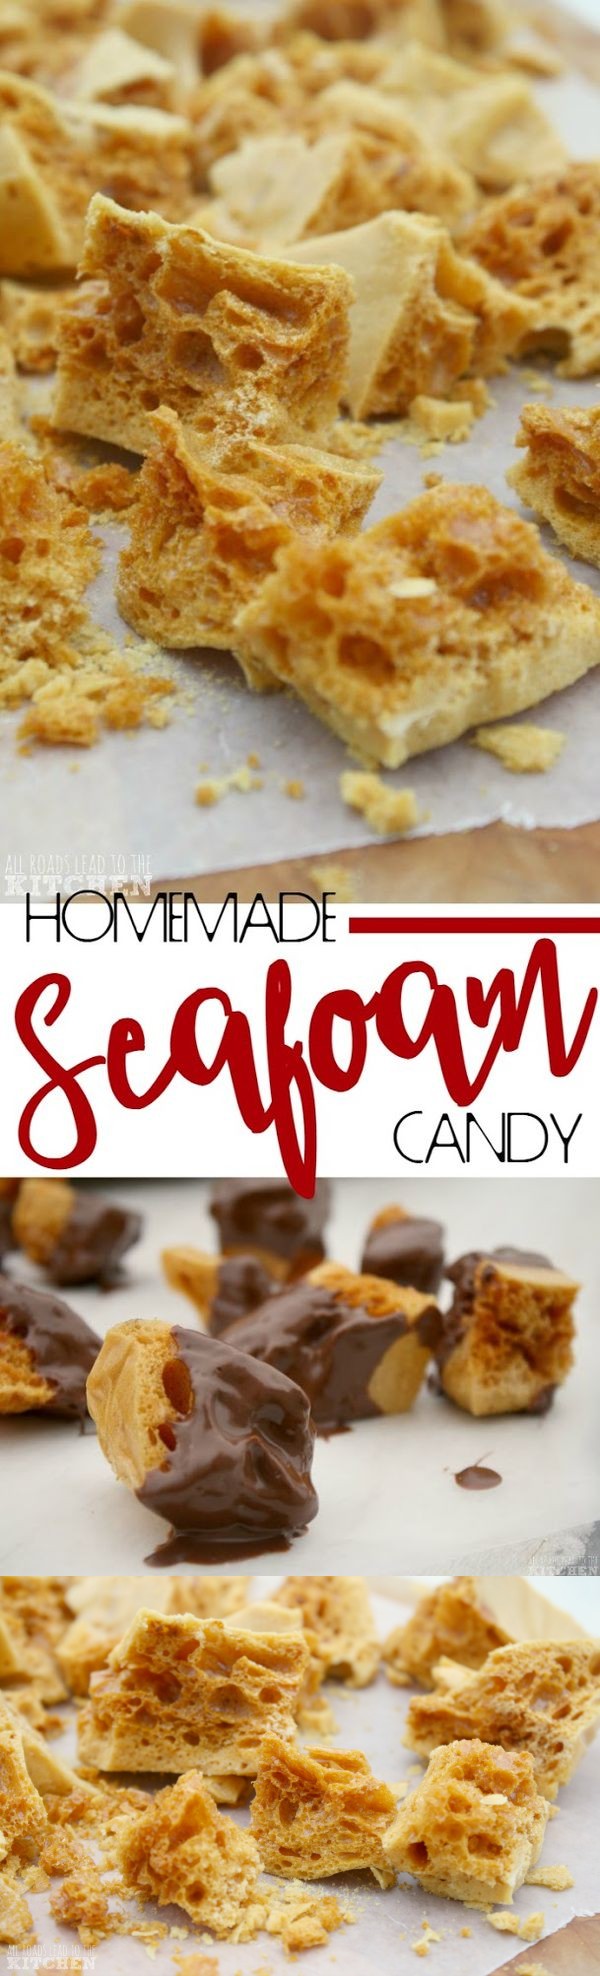 Homemade Seafoam Candy (aka Sponge Candy, Honeycomb, Hokey Pokey, Cinder Toffee